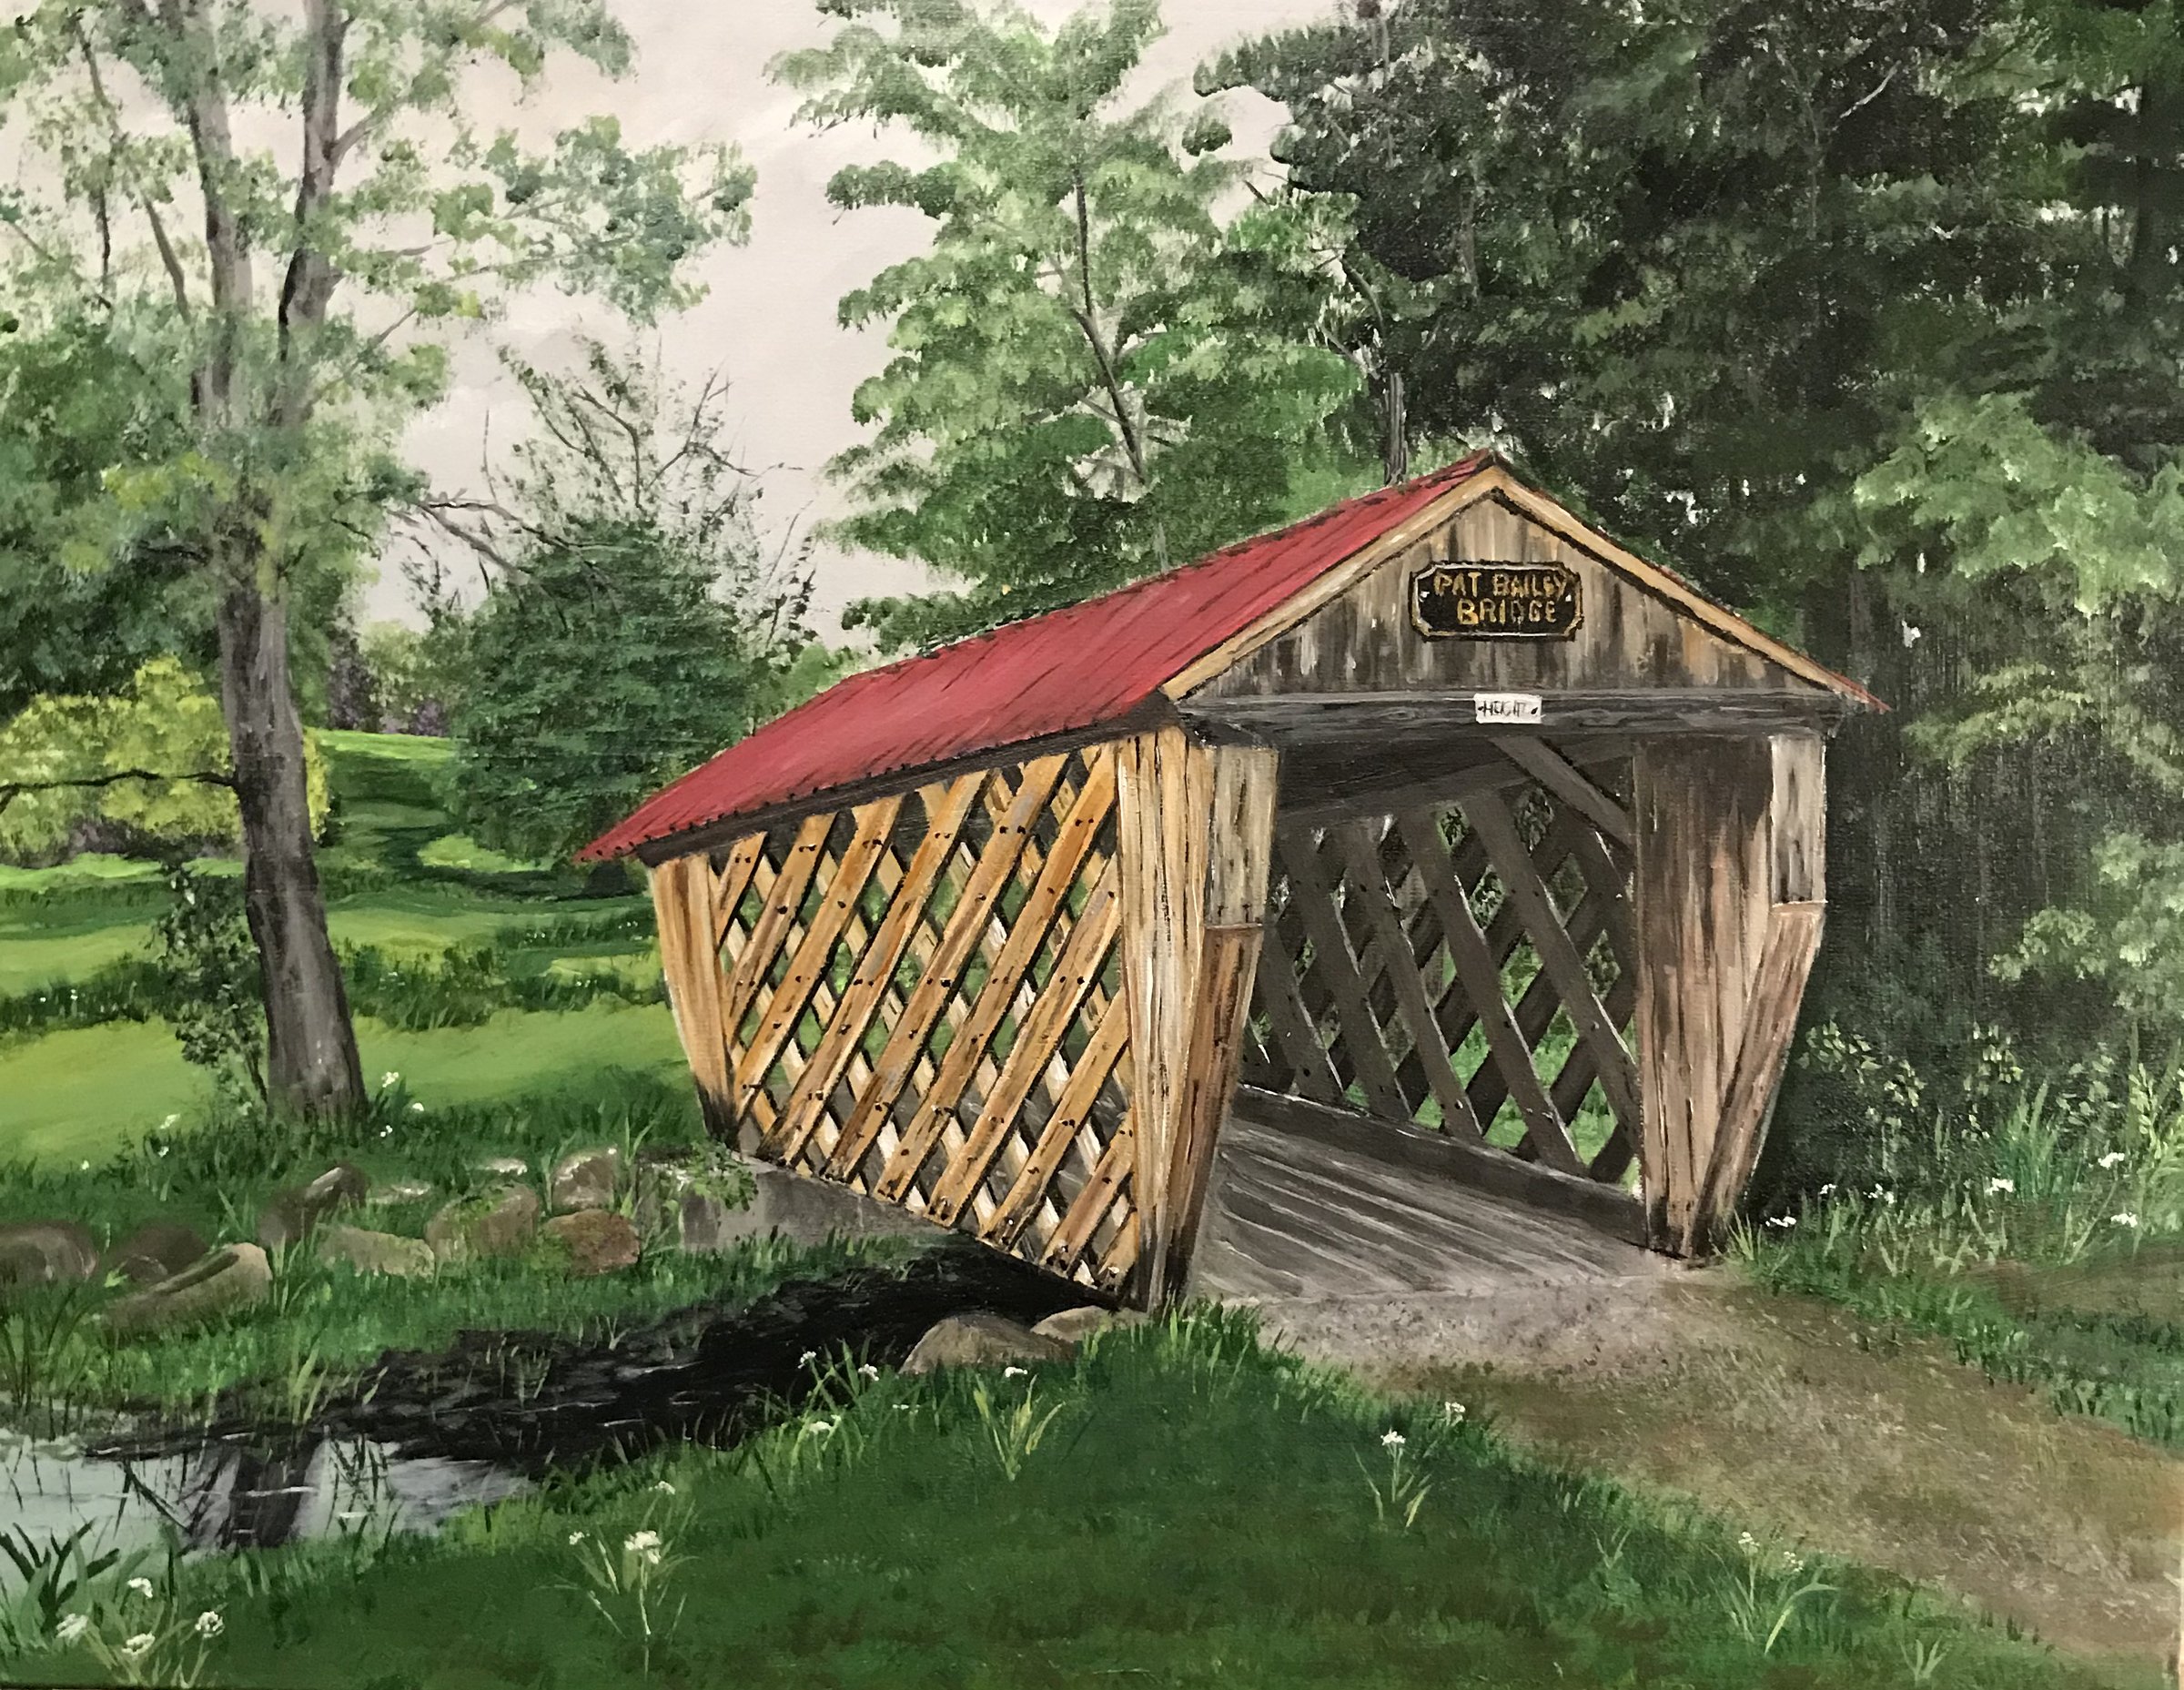 Pat Bailey Bridge 14” x 18 “ acrylic on canvas panel